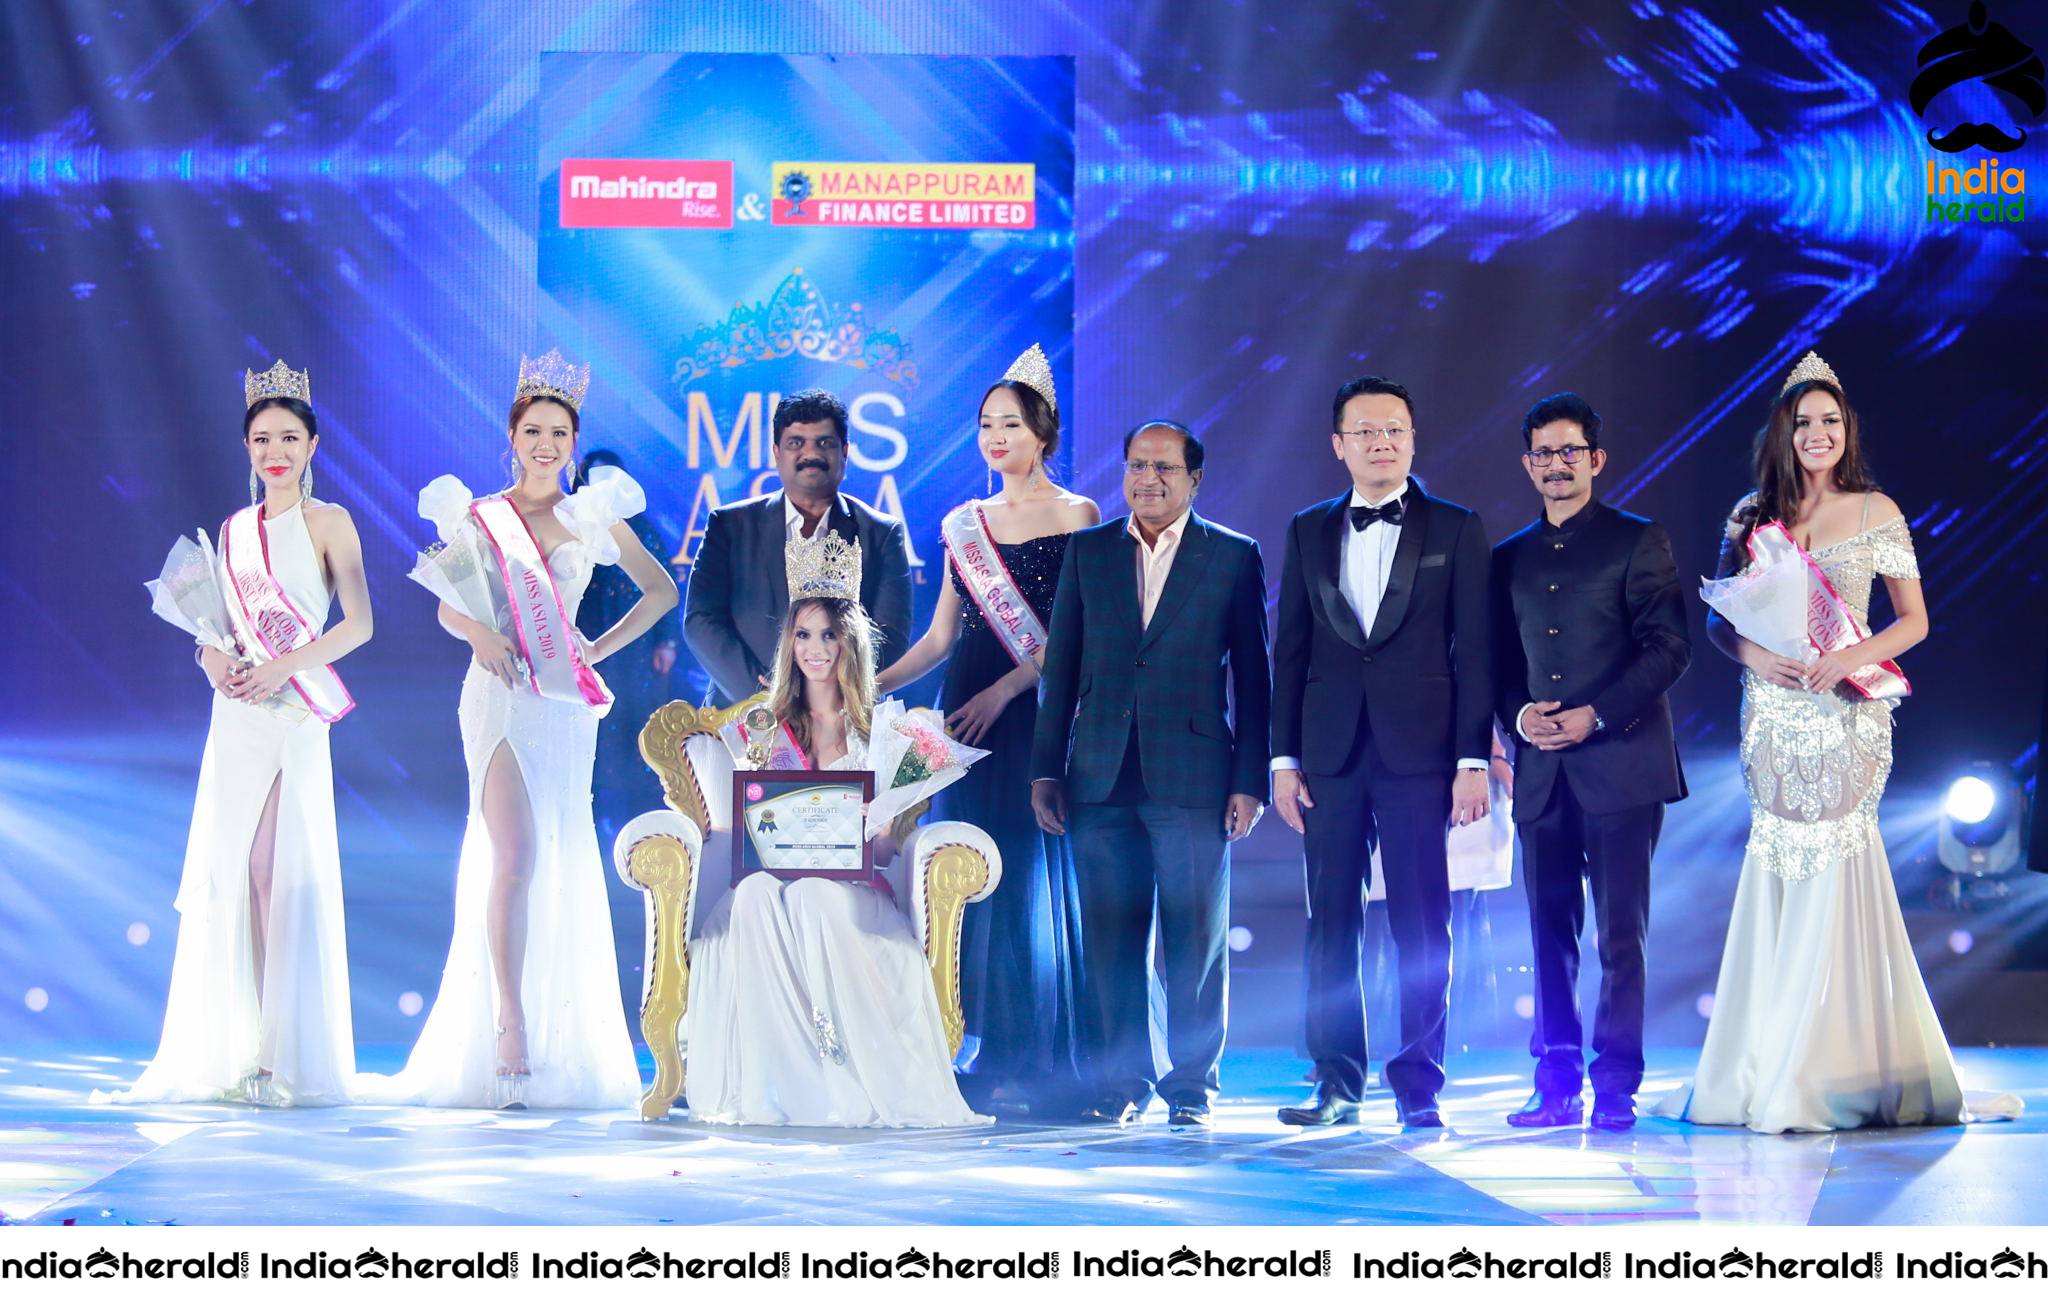 Mahindra And Manappuram Miss Asia Global 2019 Grand Final Fashion Show Set 4